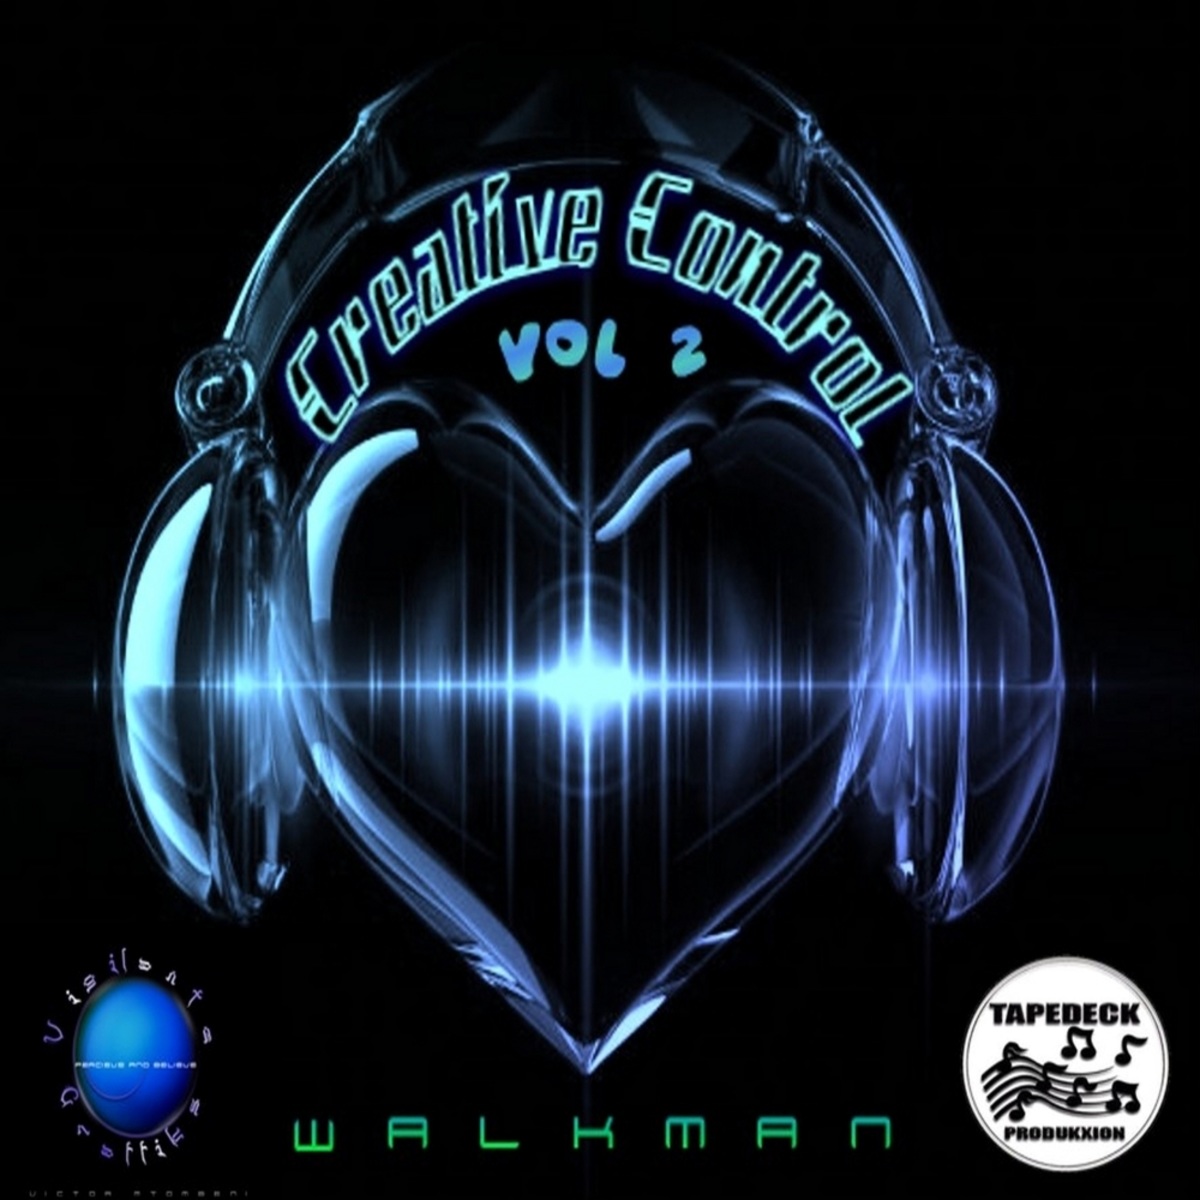 Walkman - Creative Control, Vol. 2 / Tapedeck Produkxion(Pty)Ltd